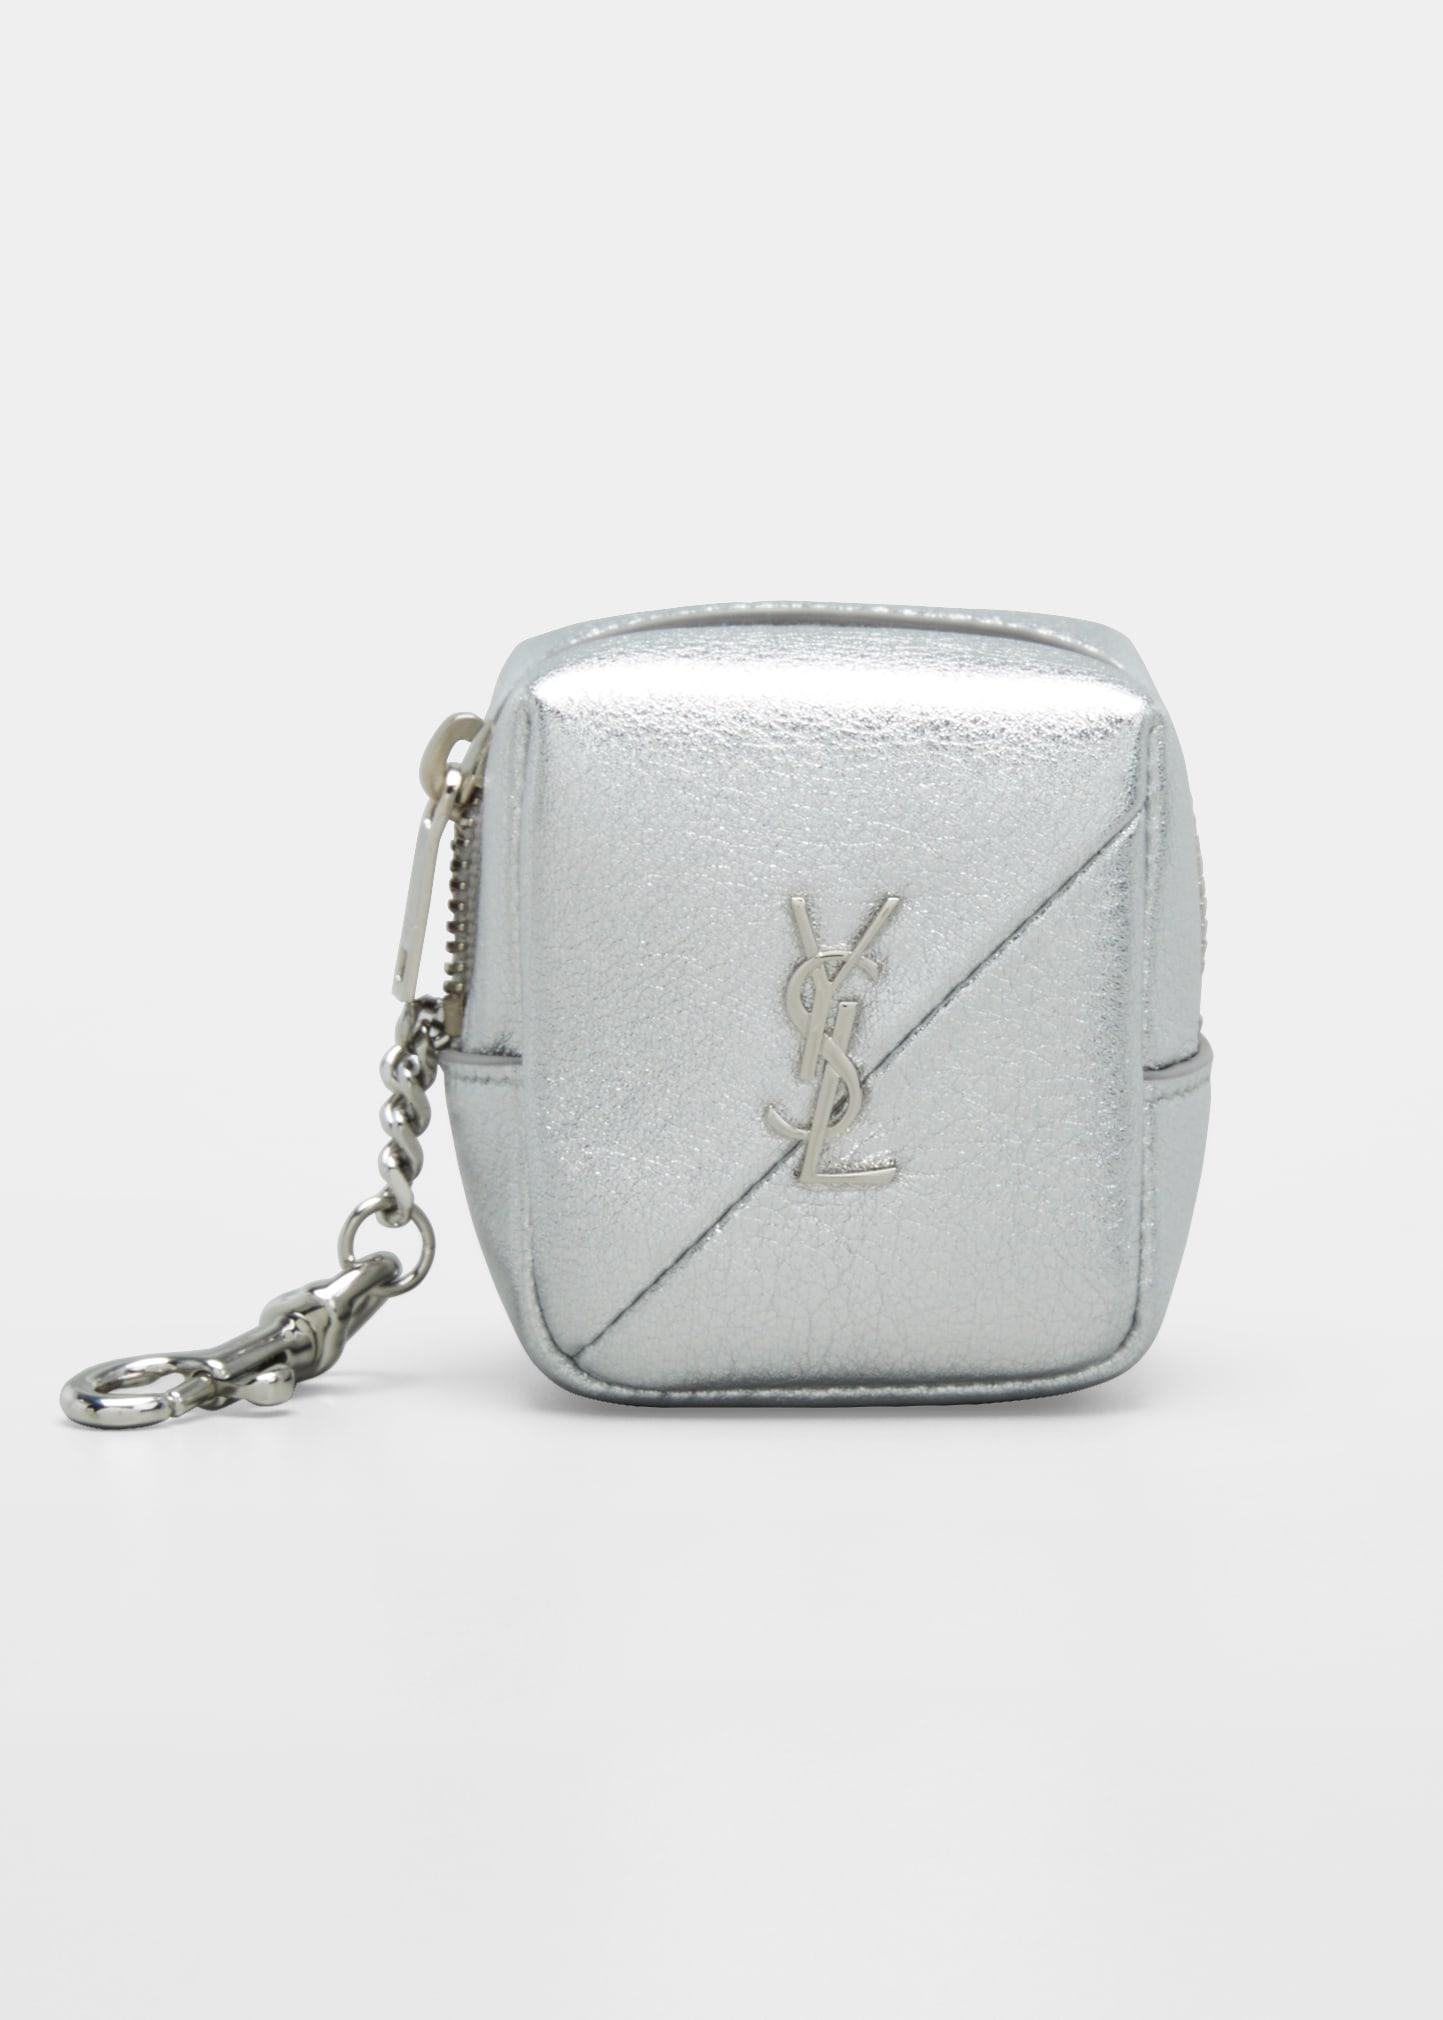 Yves Saint Laurent, Bags, Authentic Yves Saint Laurent Card Case With Key  Chain